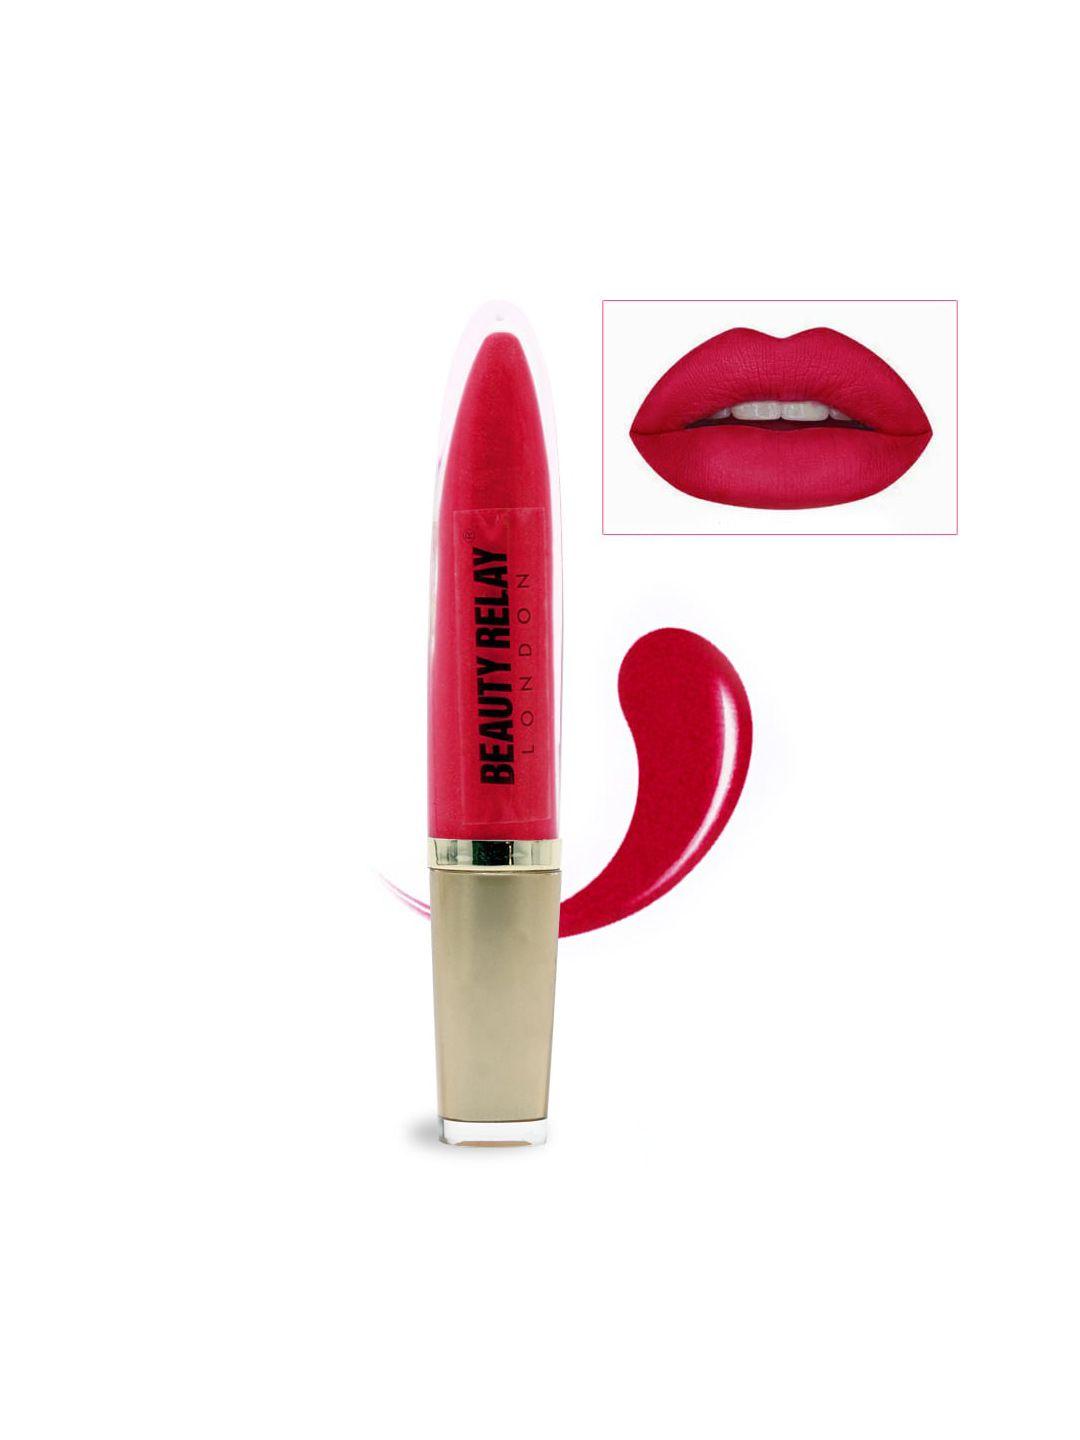 beautyrelay london marker lip & cheek gleam lip gloss 5g - sweet cherry